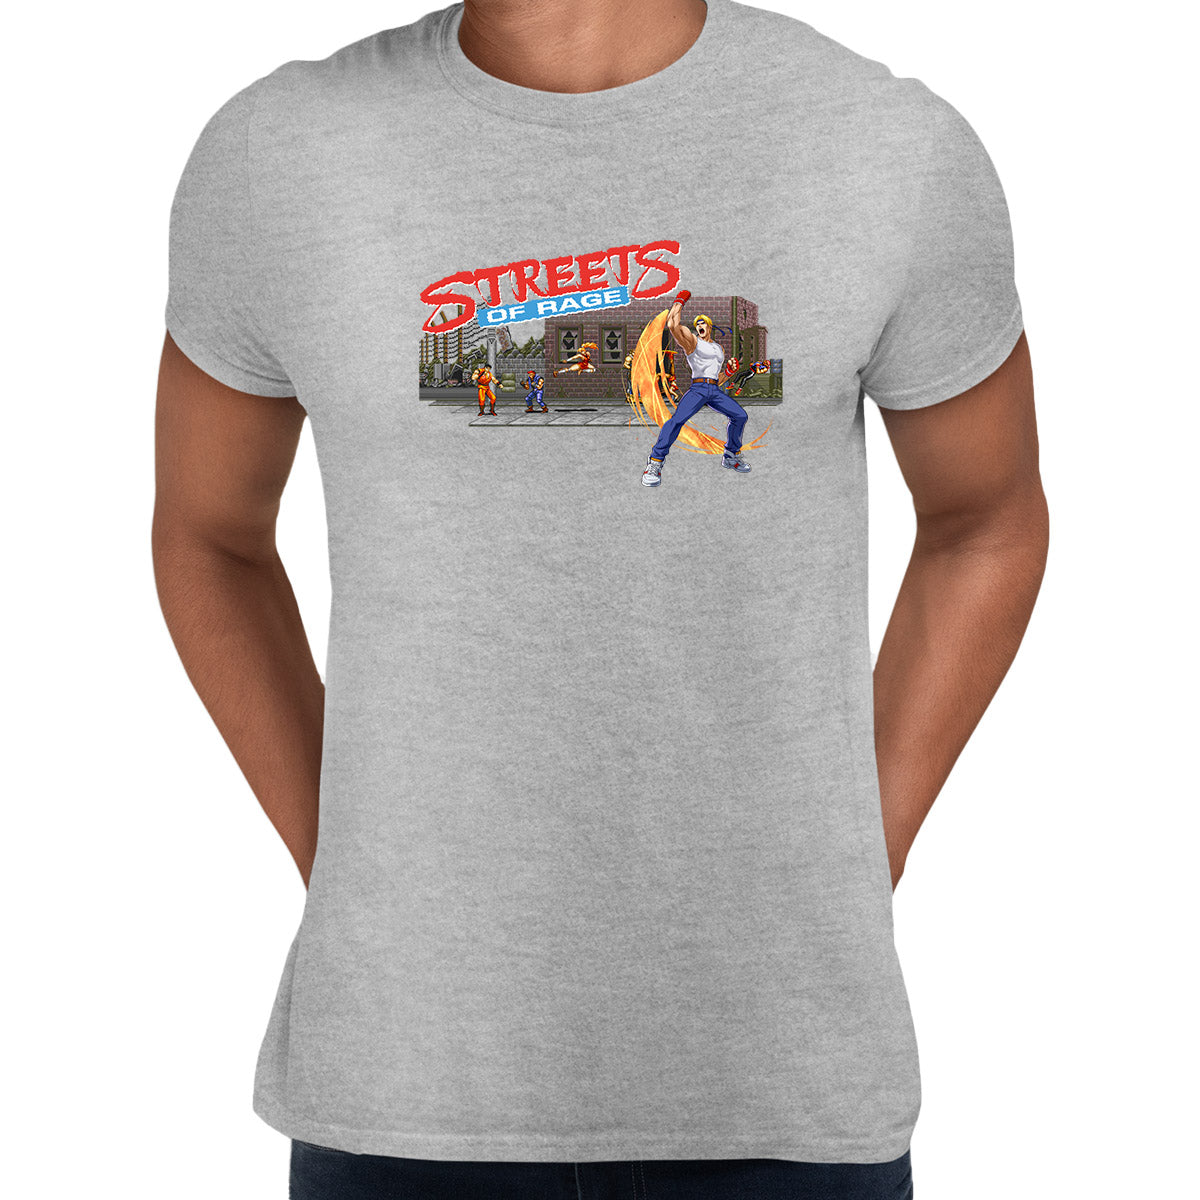 Streets of Rage 3 Grey T-shirt